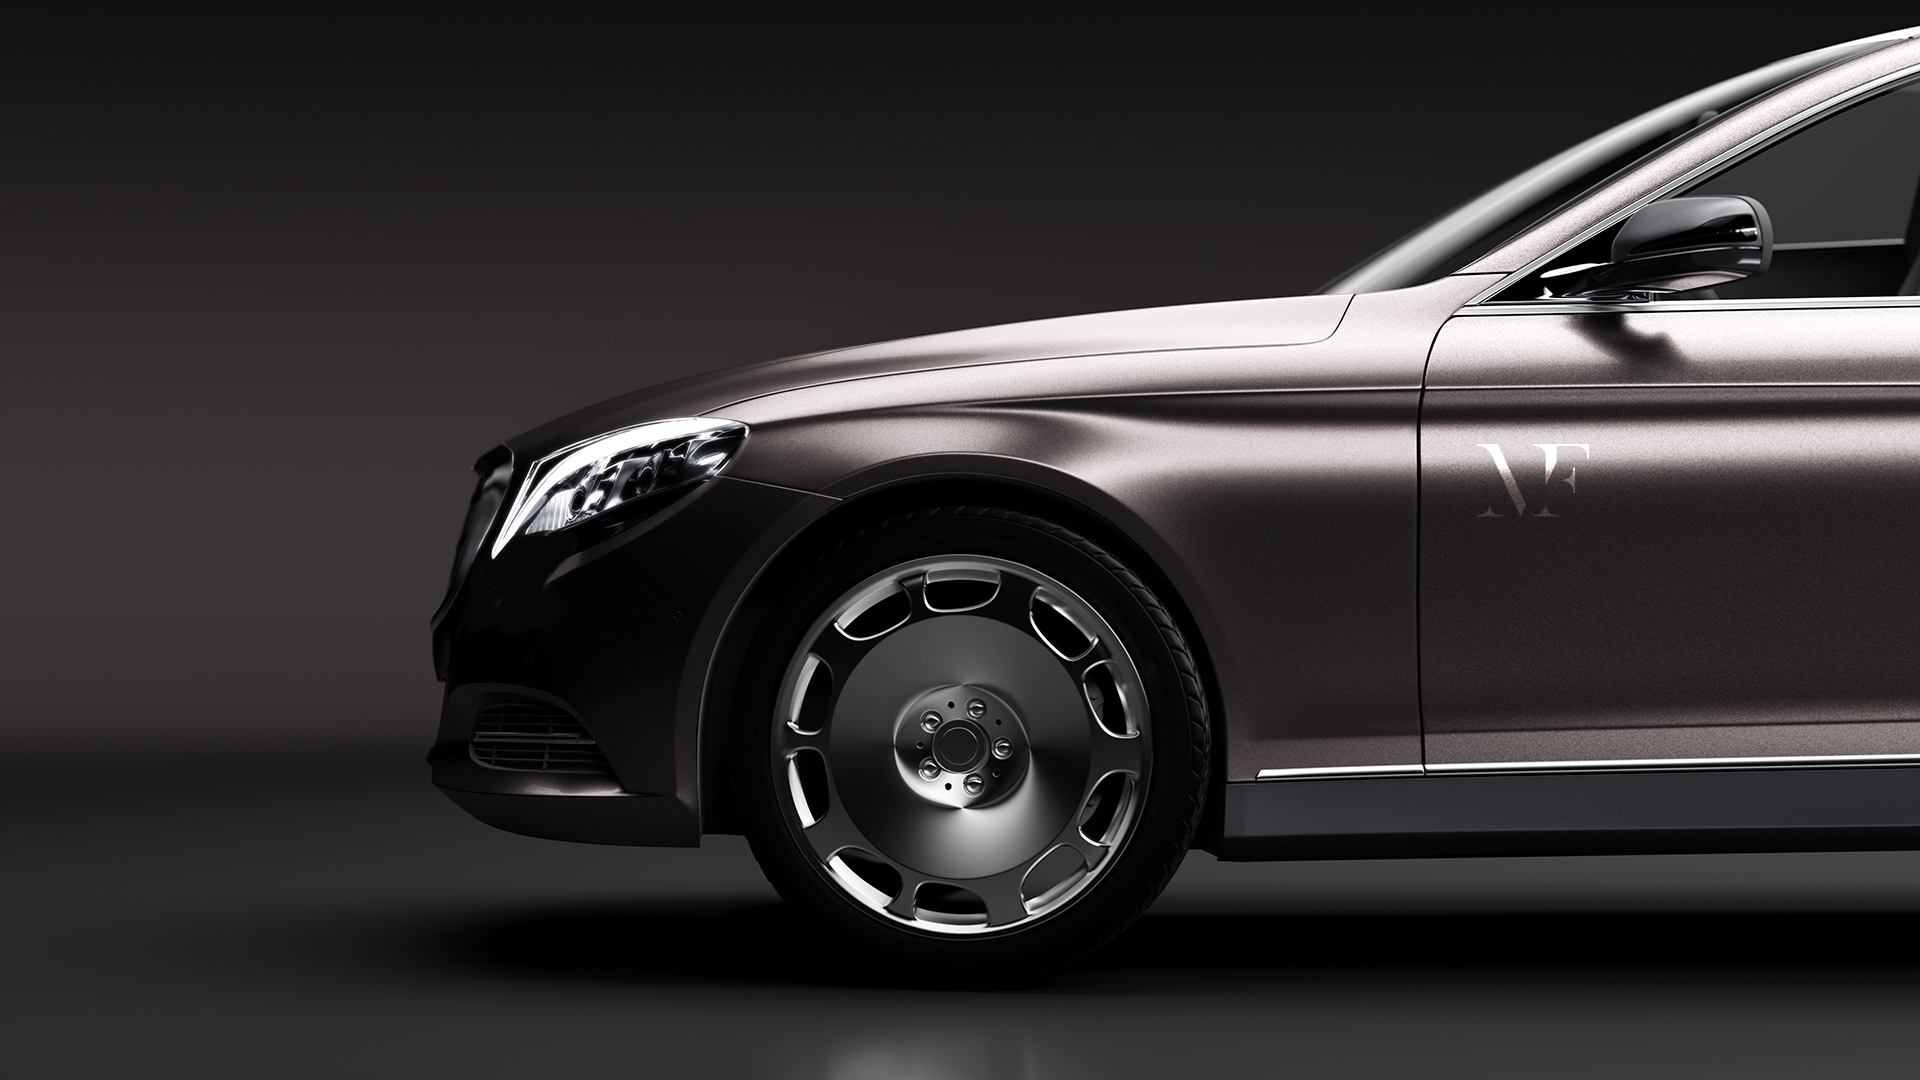 Limo car, a premium luxury vehicle on black. Vip transport,